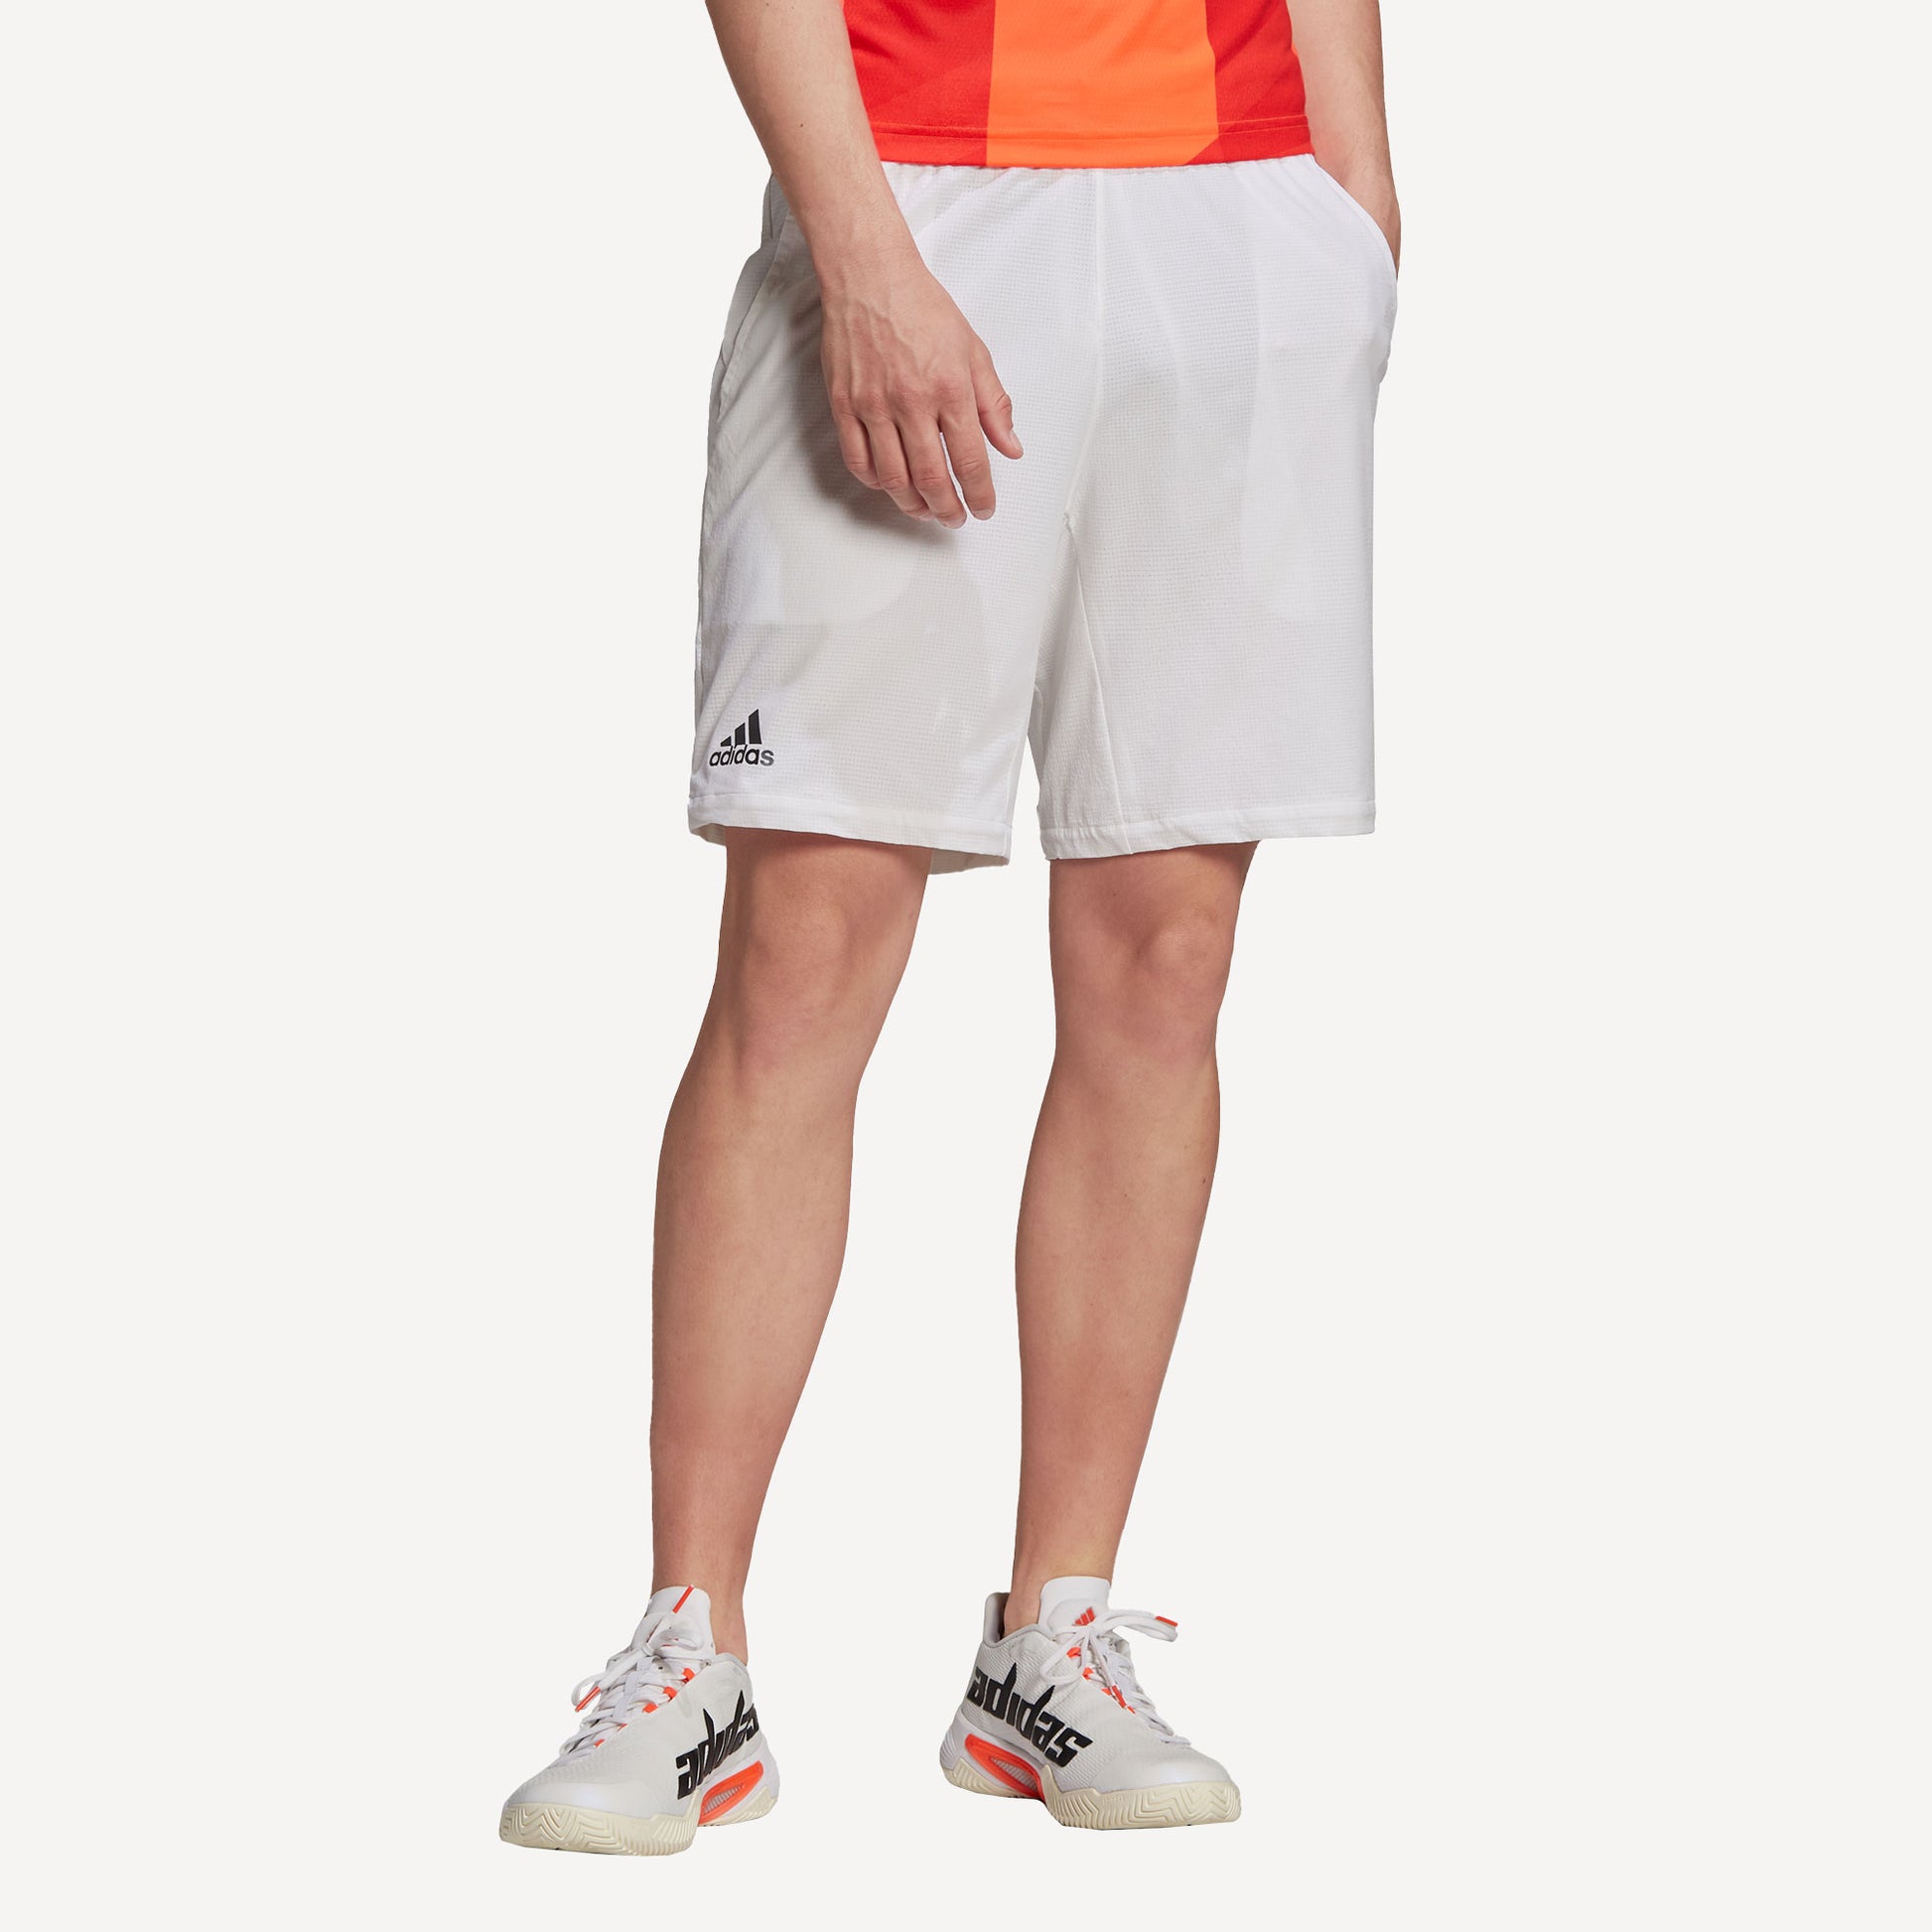 adidas Ergo Men's 7-Inch Tennis Shorts White (3)